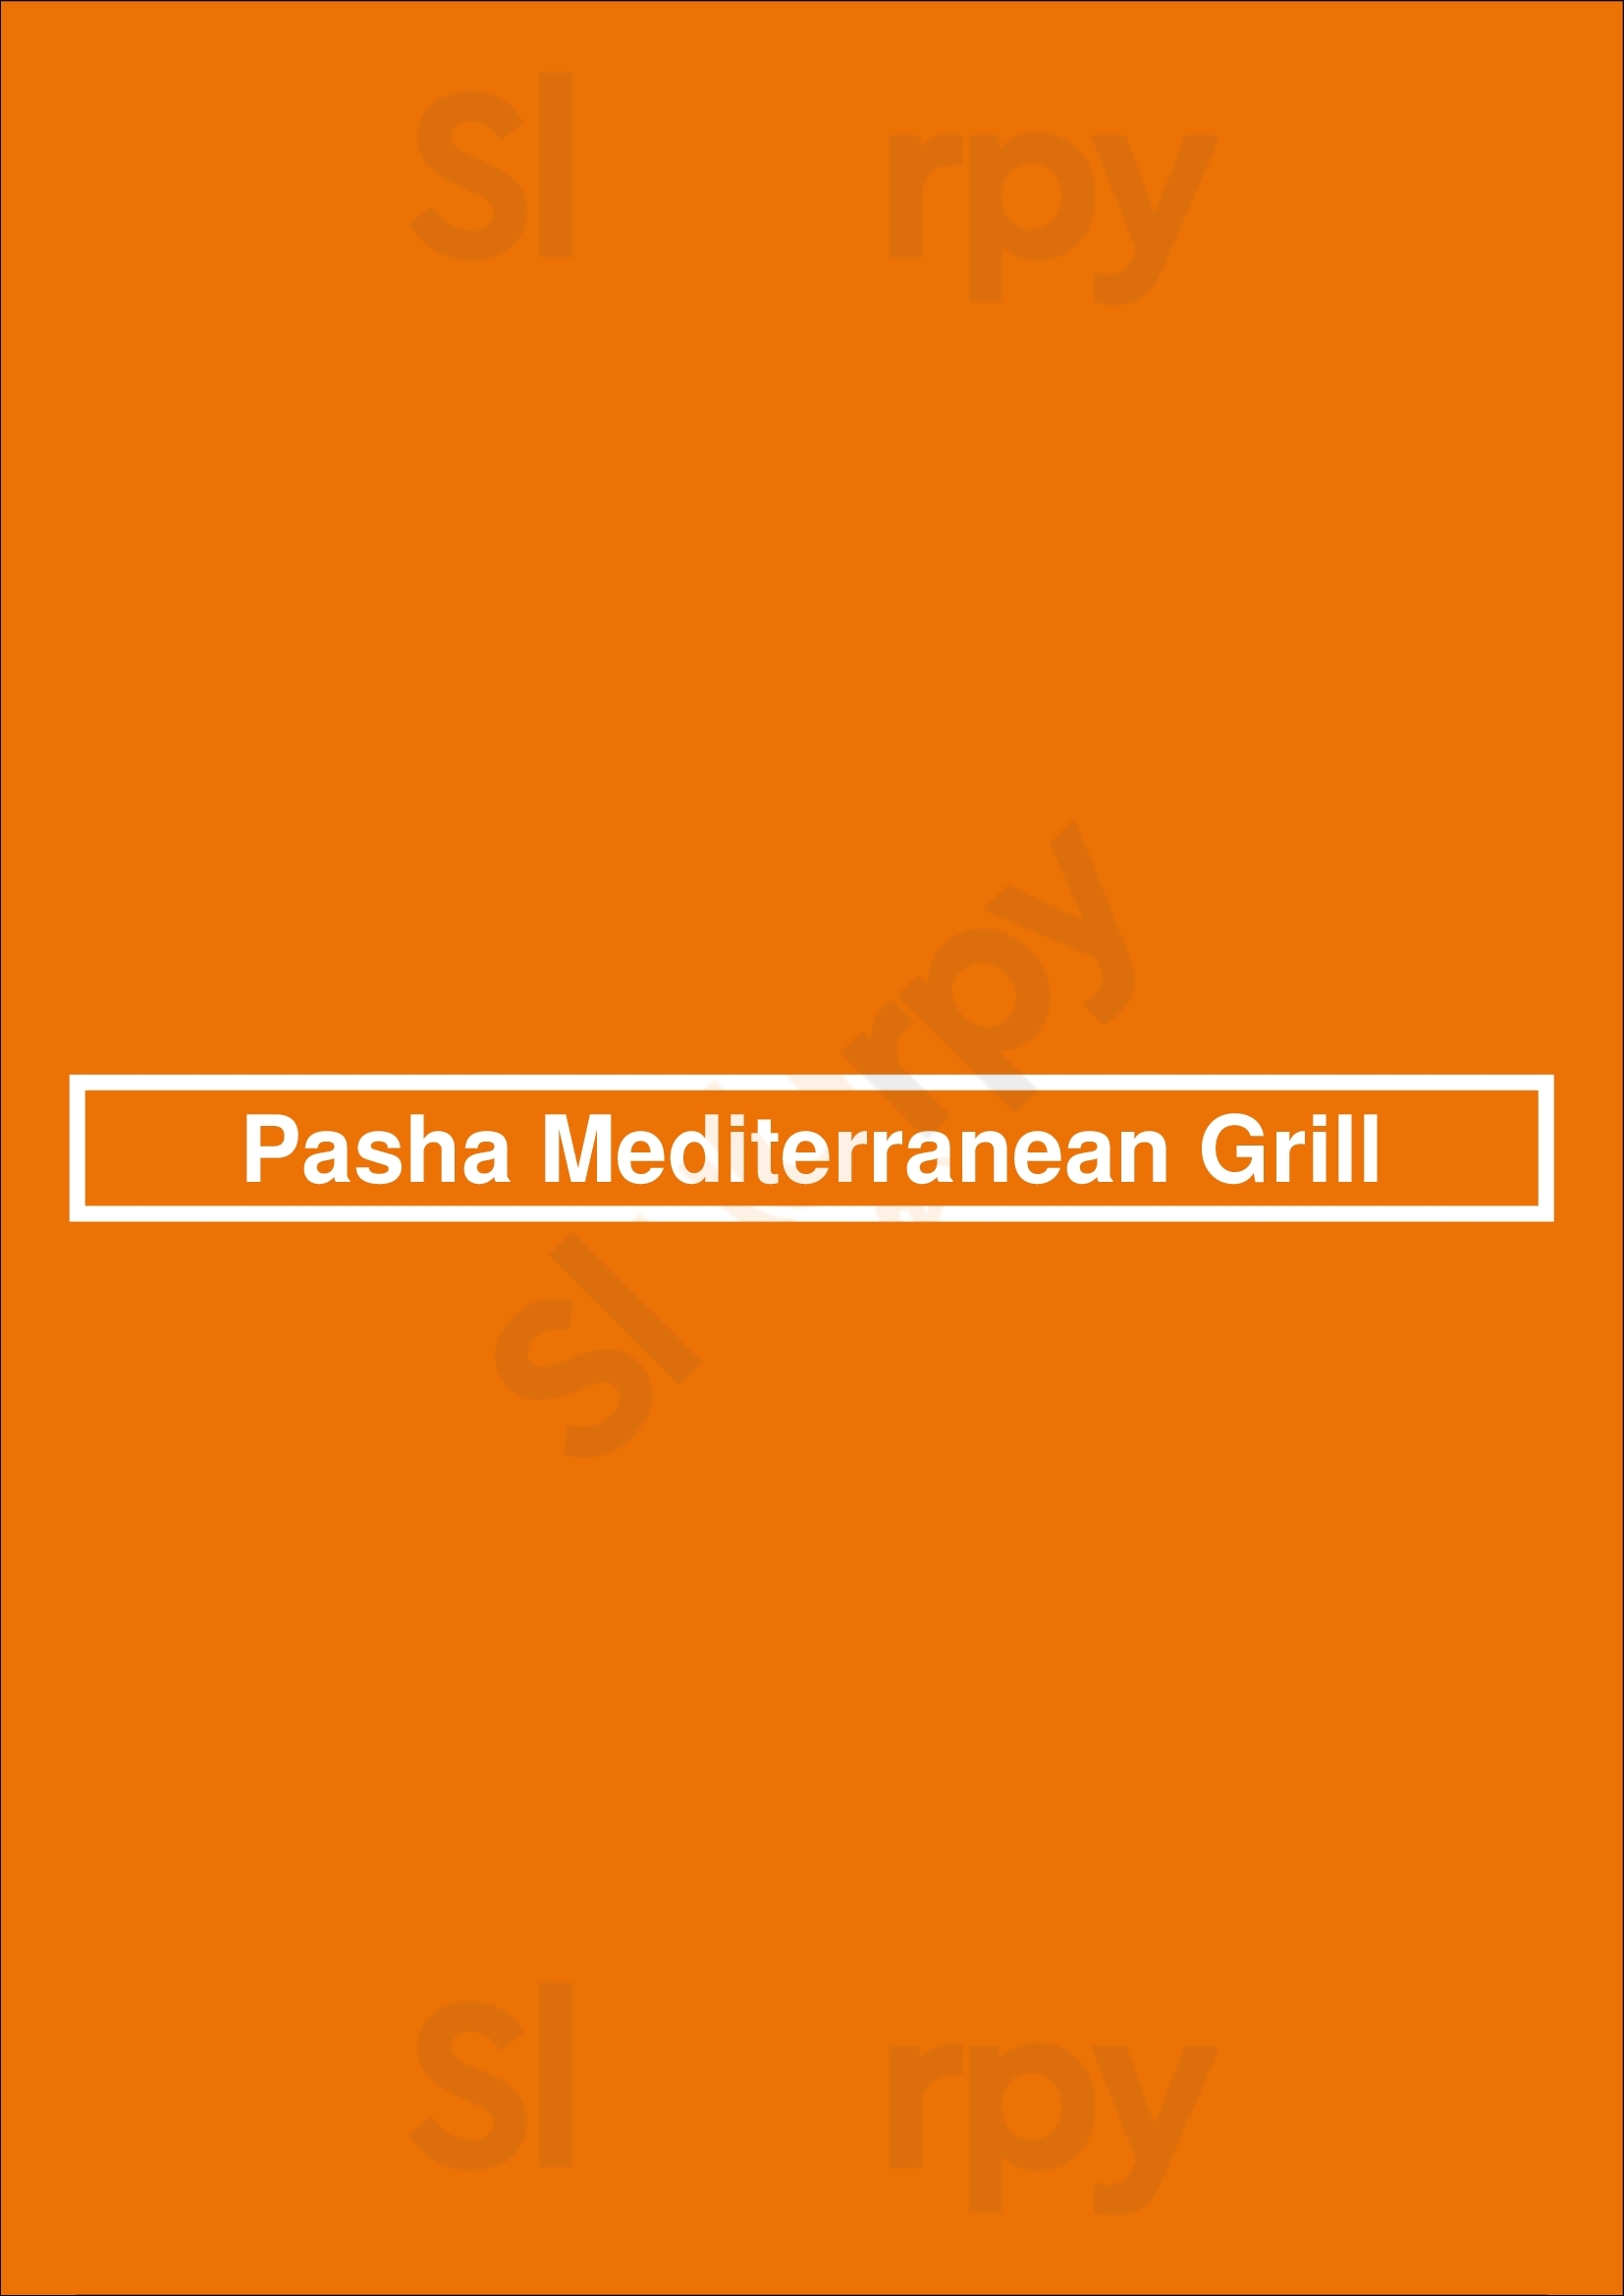 Pasha Mediterranean Grill San Antonio Menu - 1